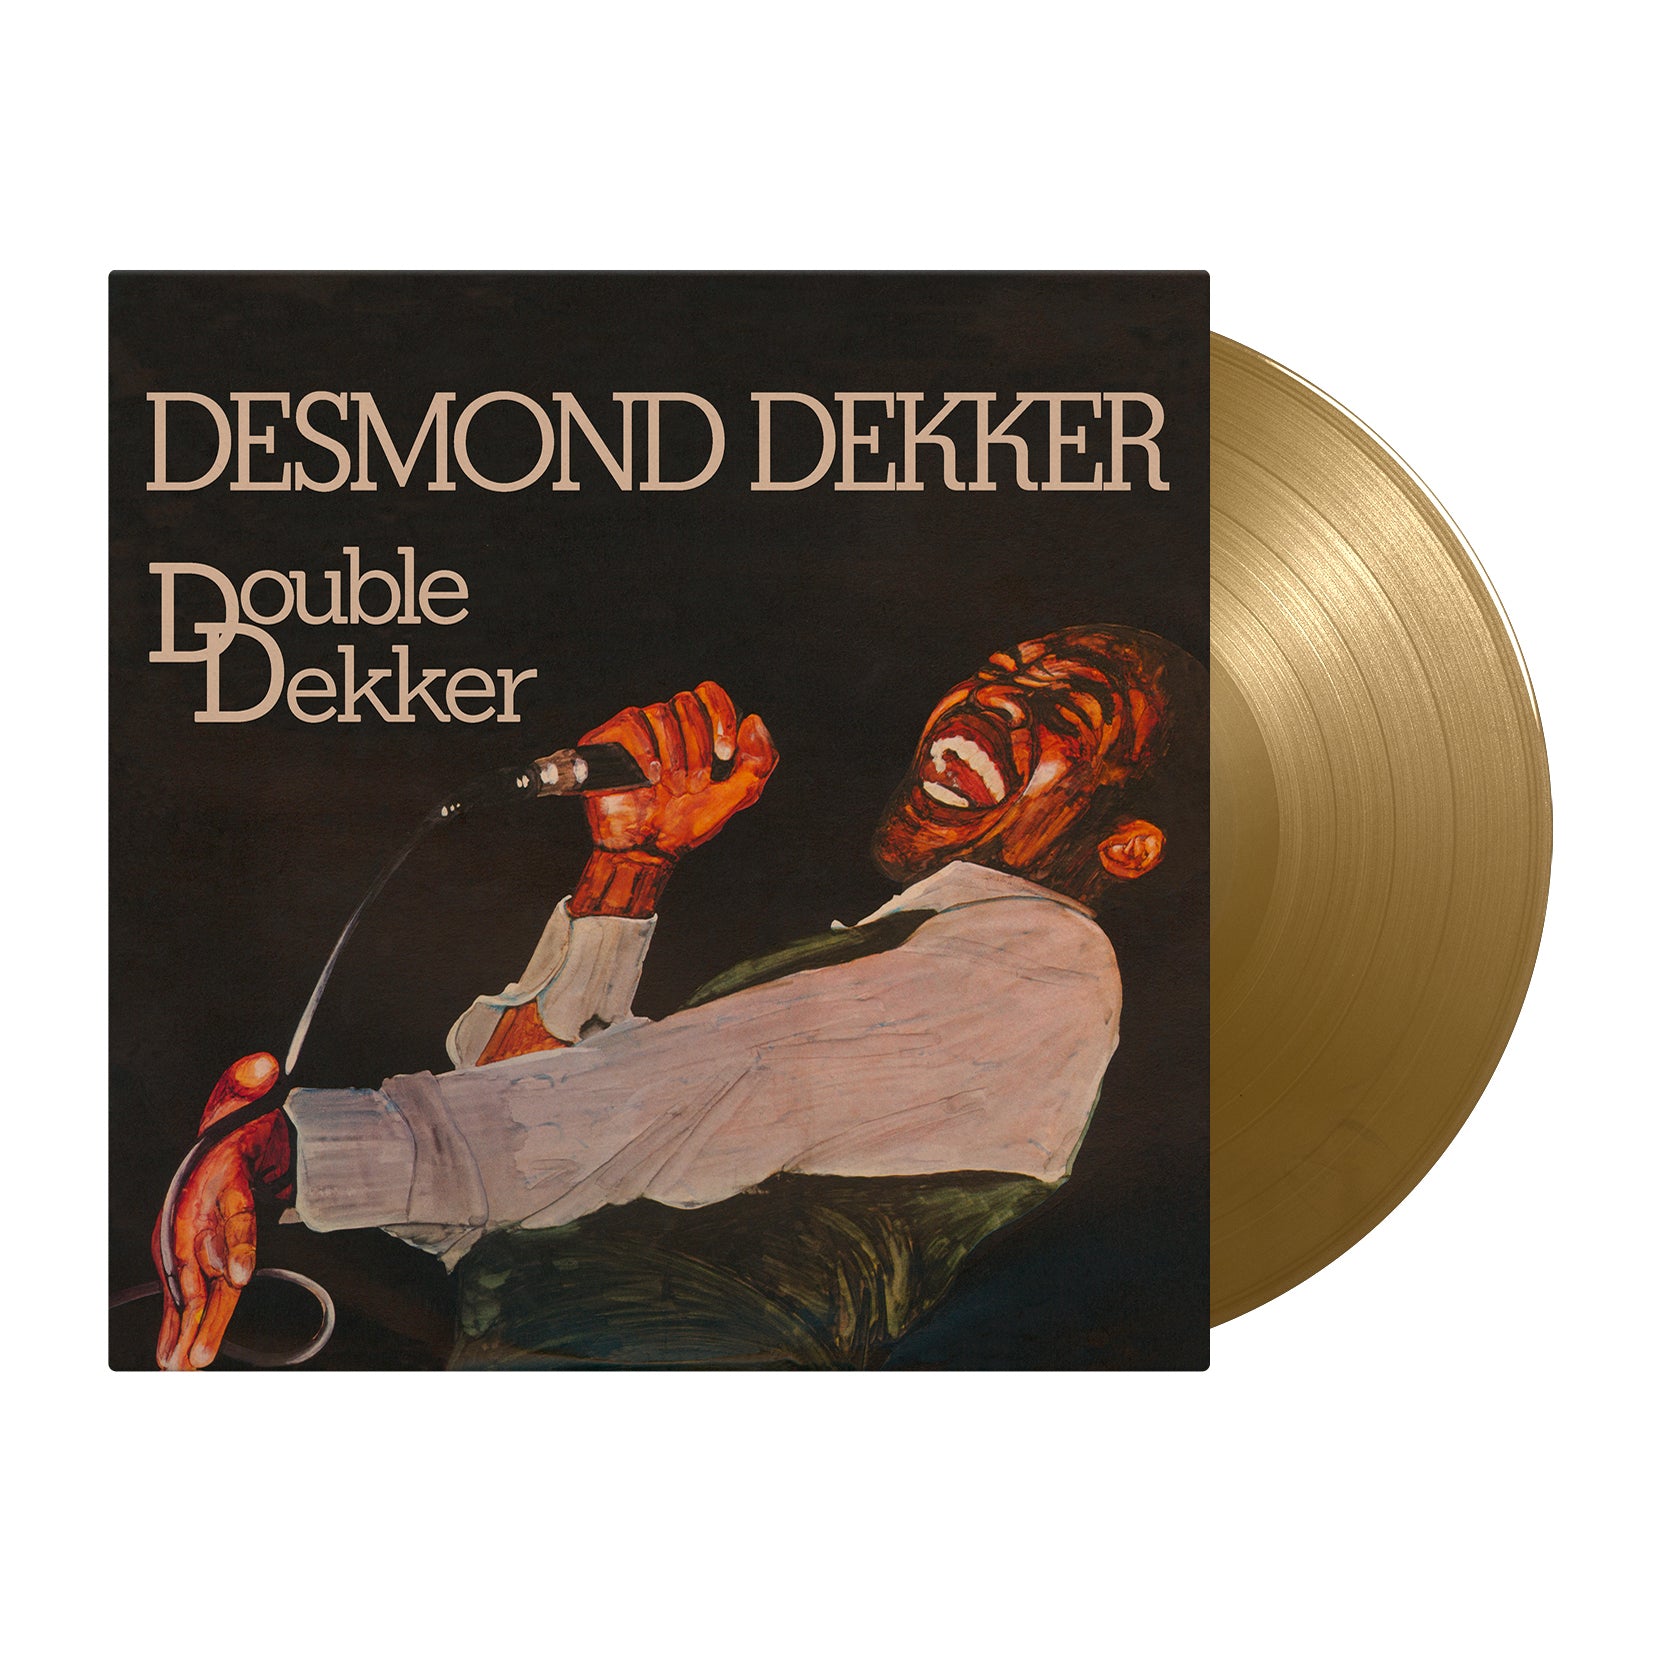 Desmond Dekker - Double Dekker: Limited Gold Vinyl 2LP